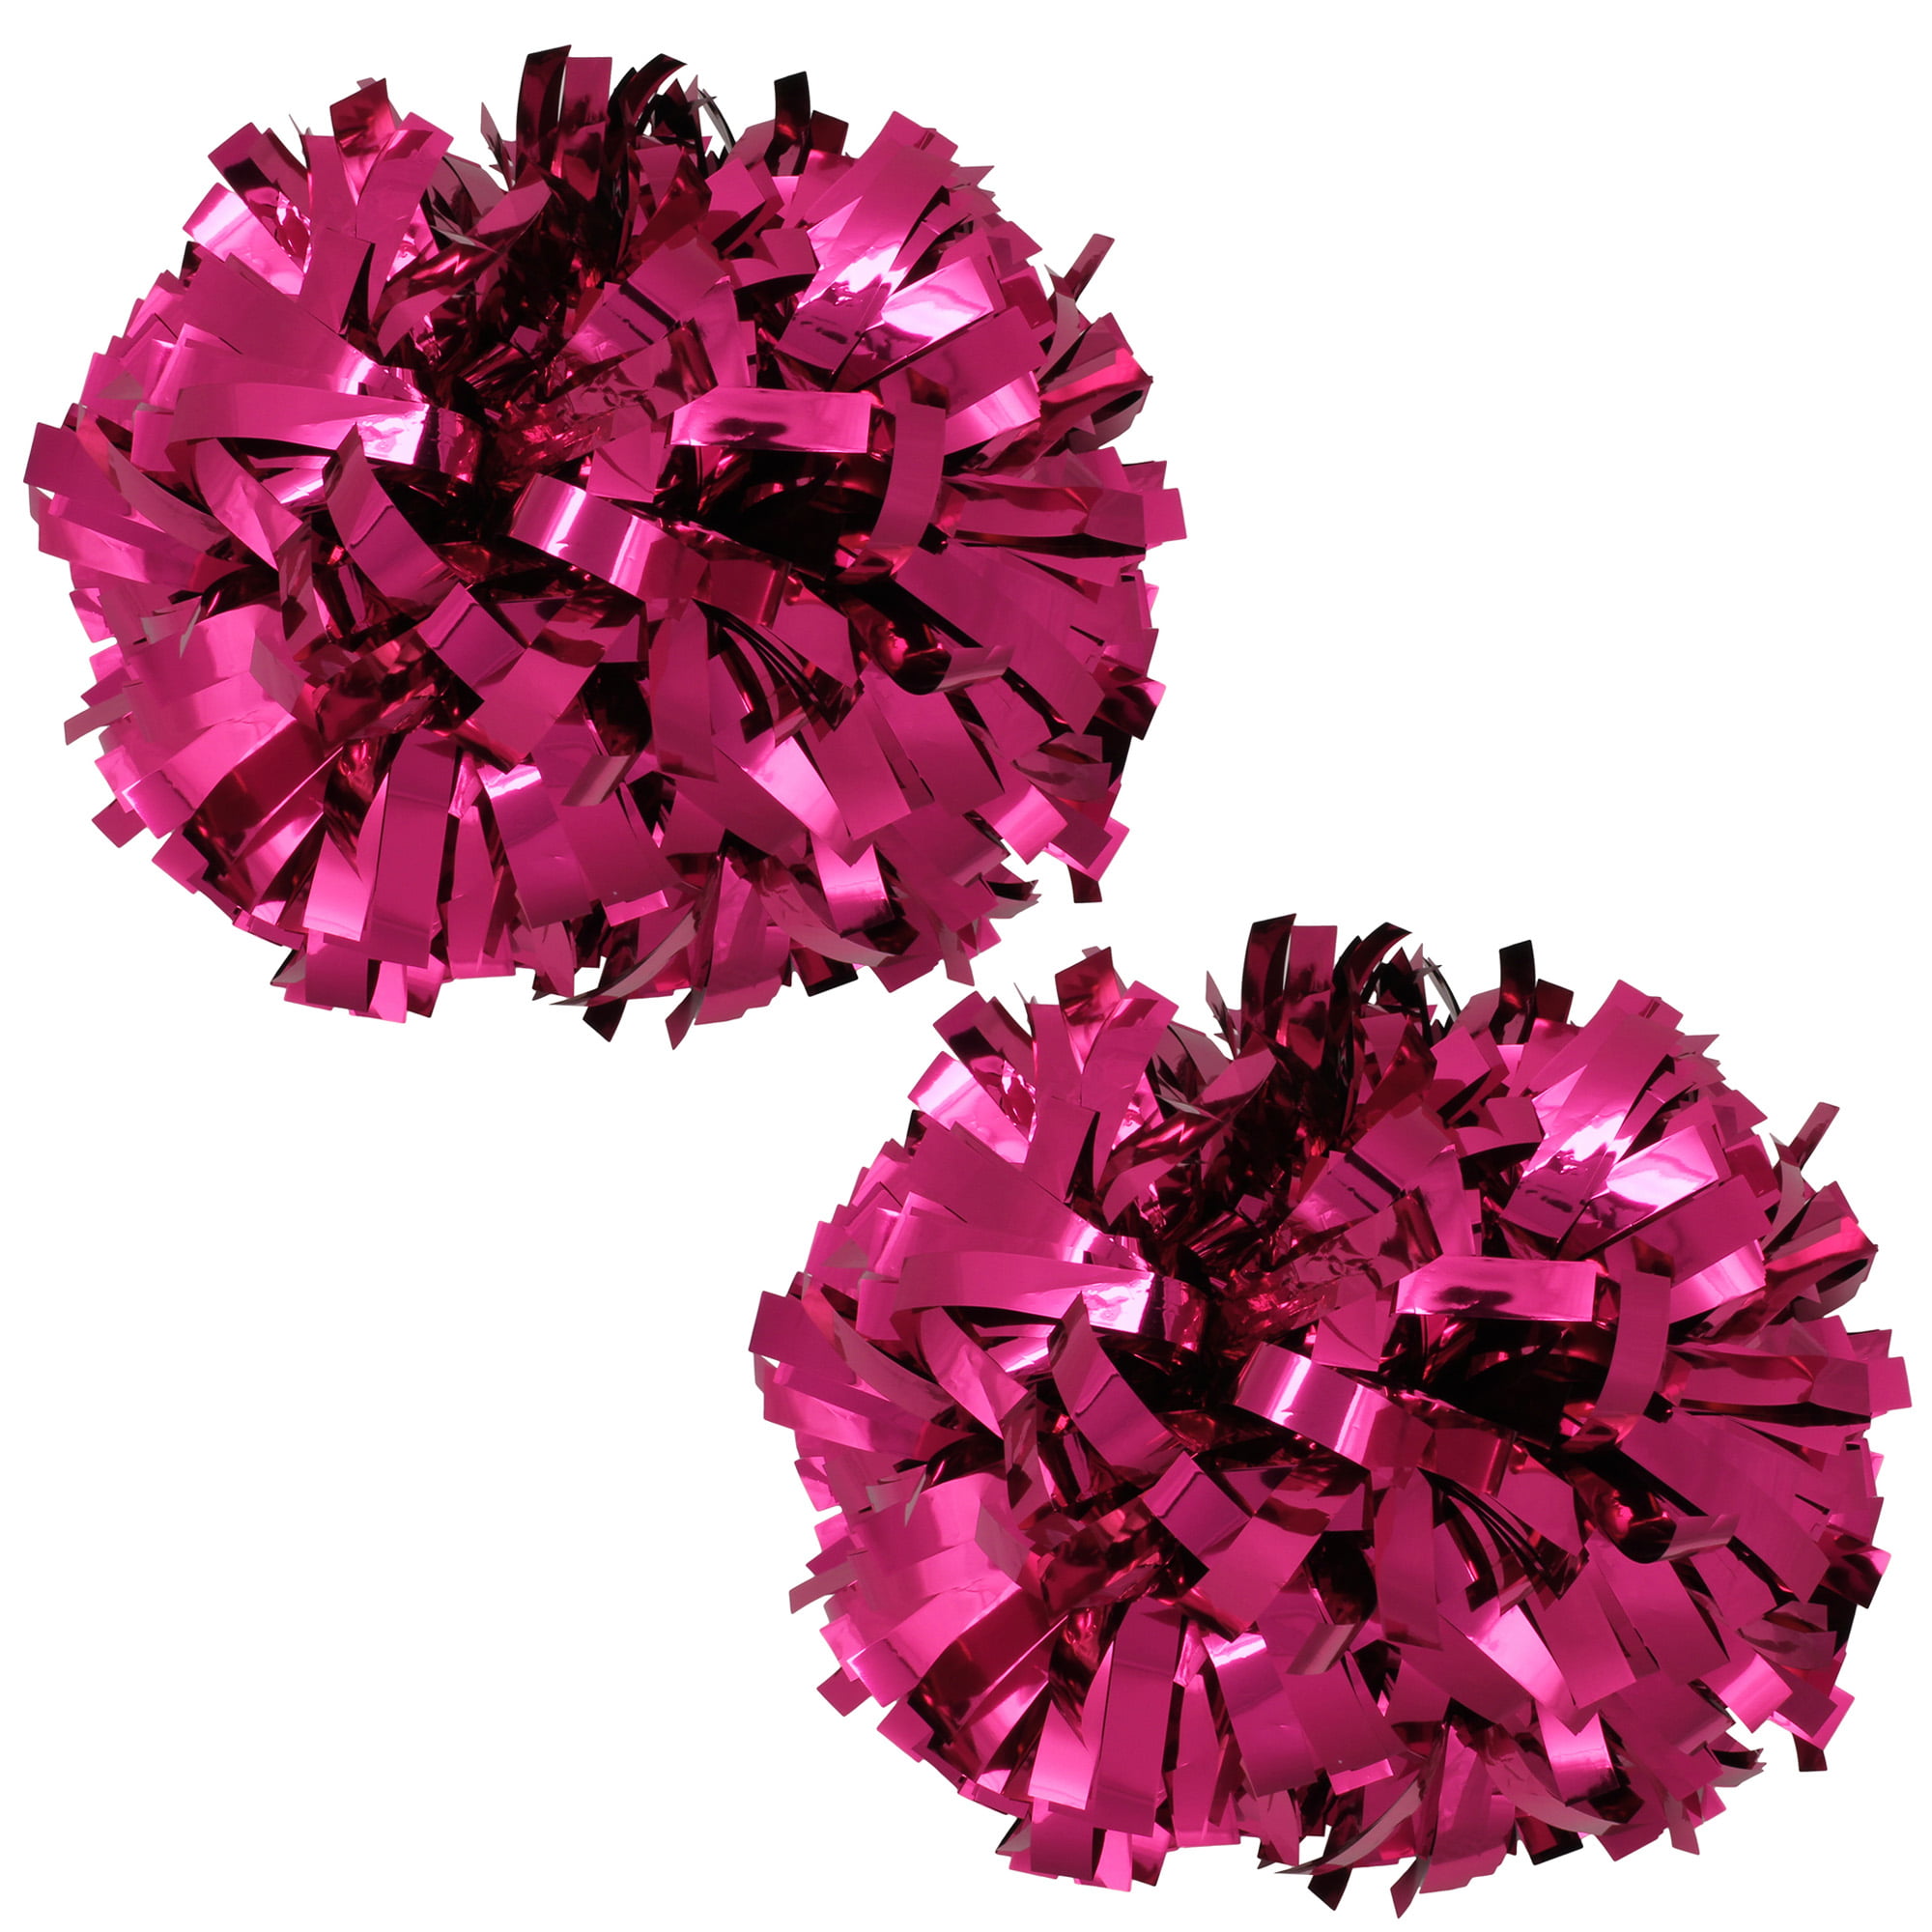 Metallic Cheer Pom Poms Cheerleading Cheerleader Gear 2 pieces one pair  poms(Shocking Hot Pink)